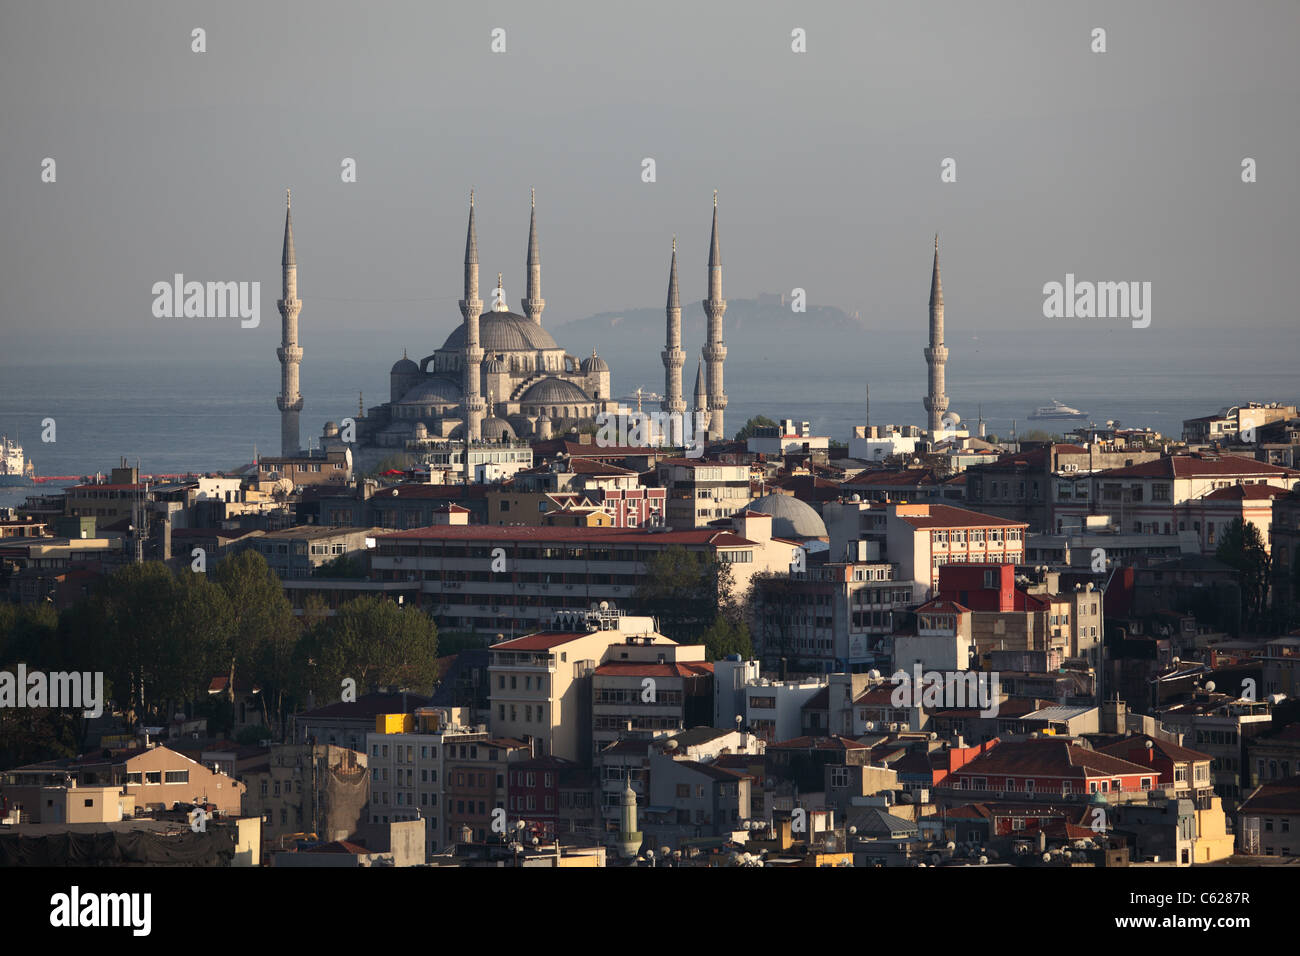 Sultan Ahmed blaue Moschee in Istanbul Türkei Stockfoto